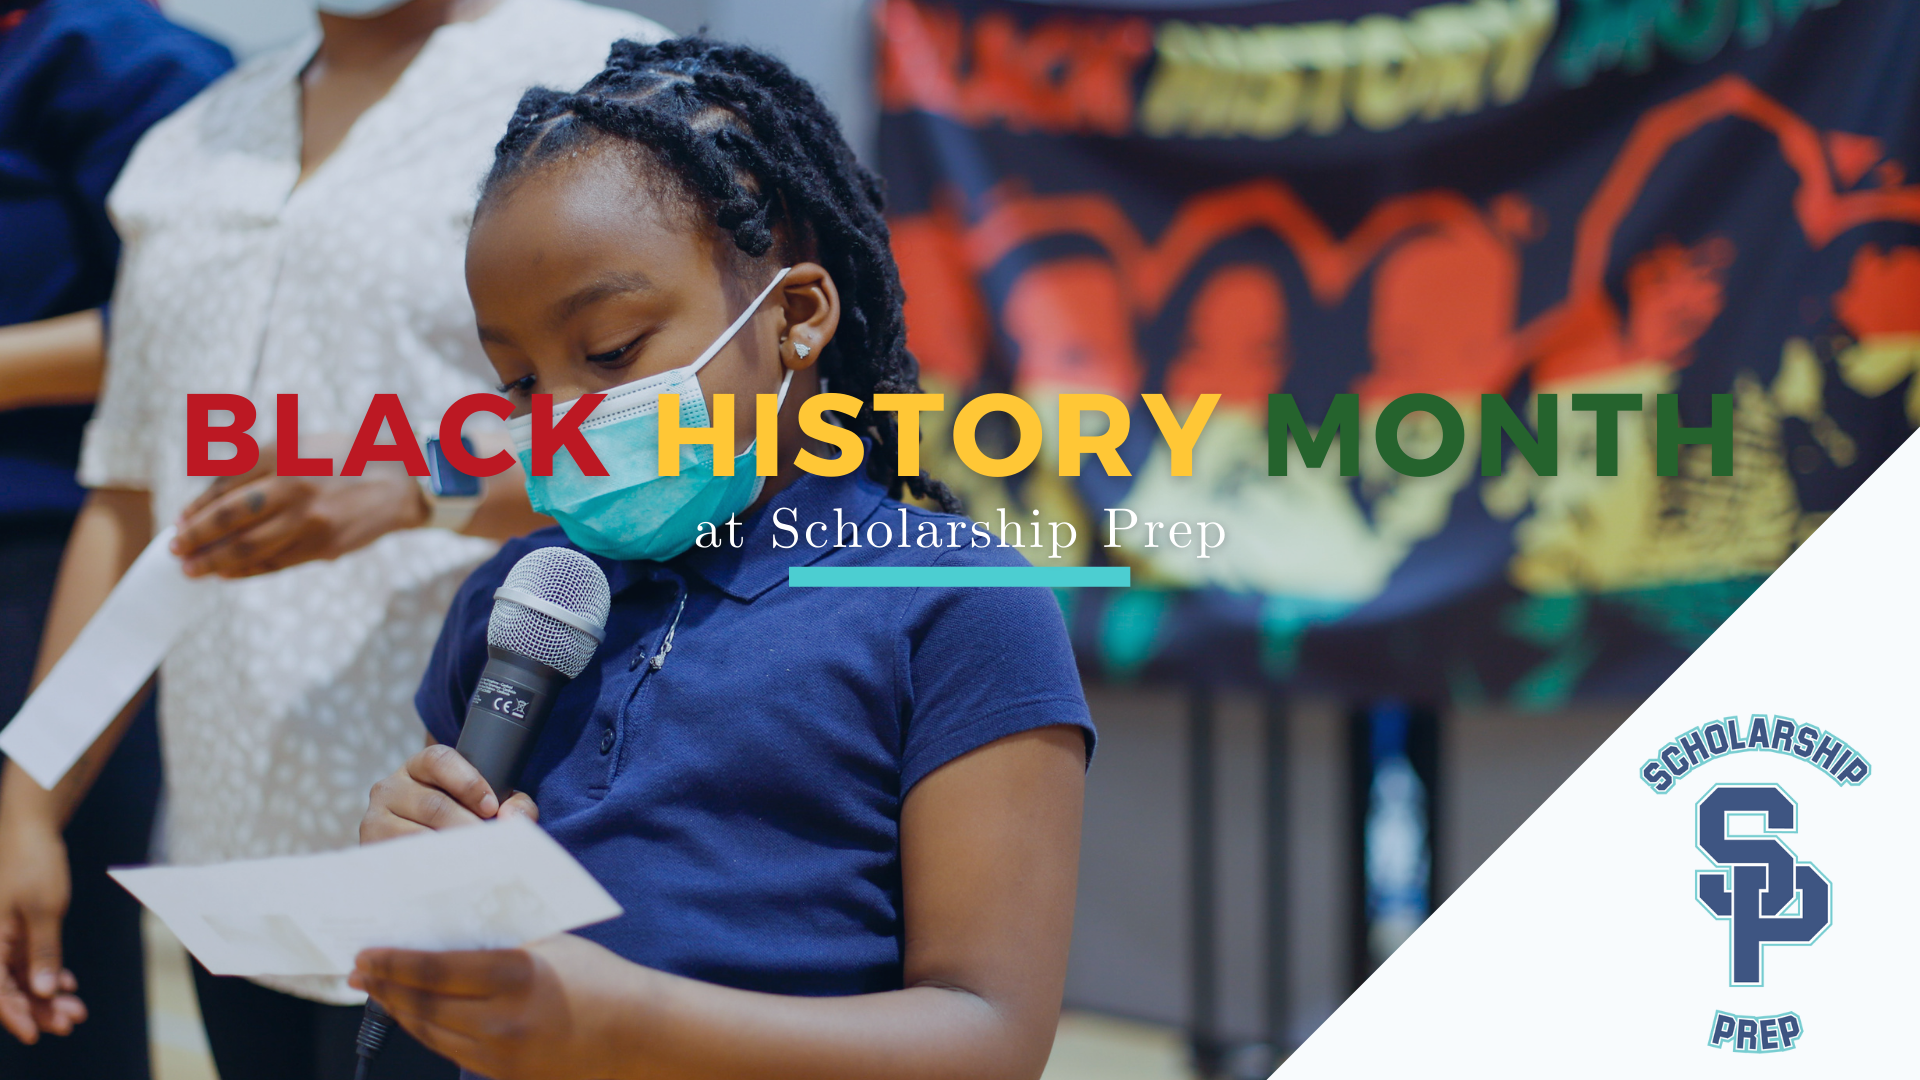 [VIDEO] - Black History Month 2022 at Scholarship Prep